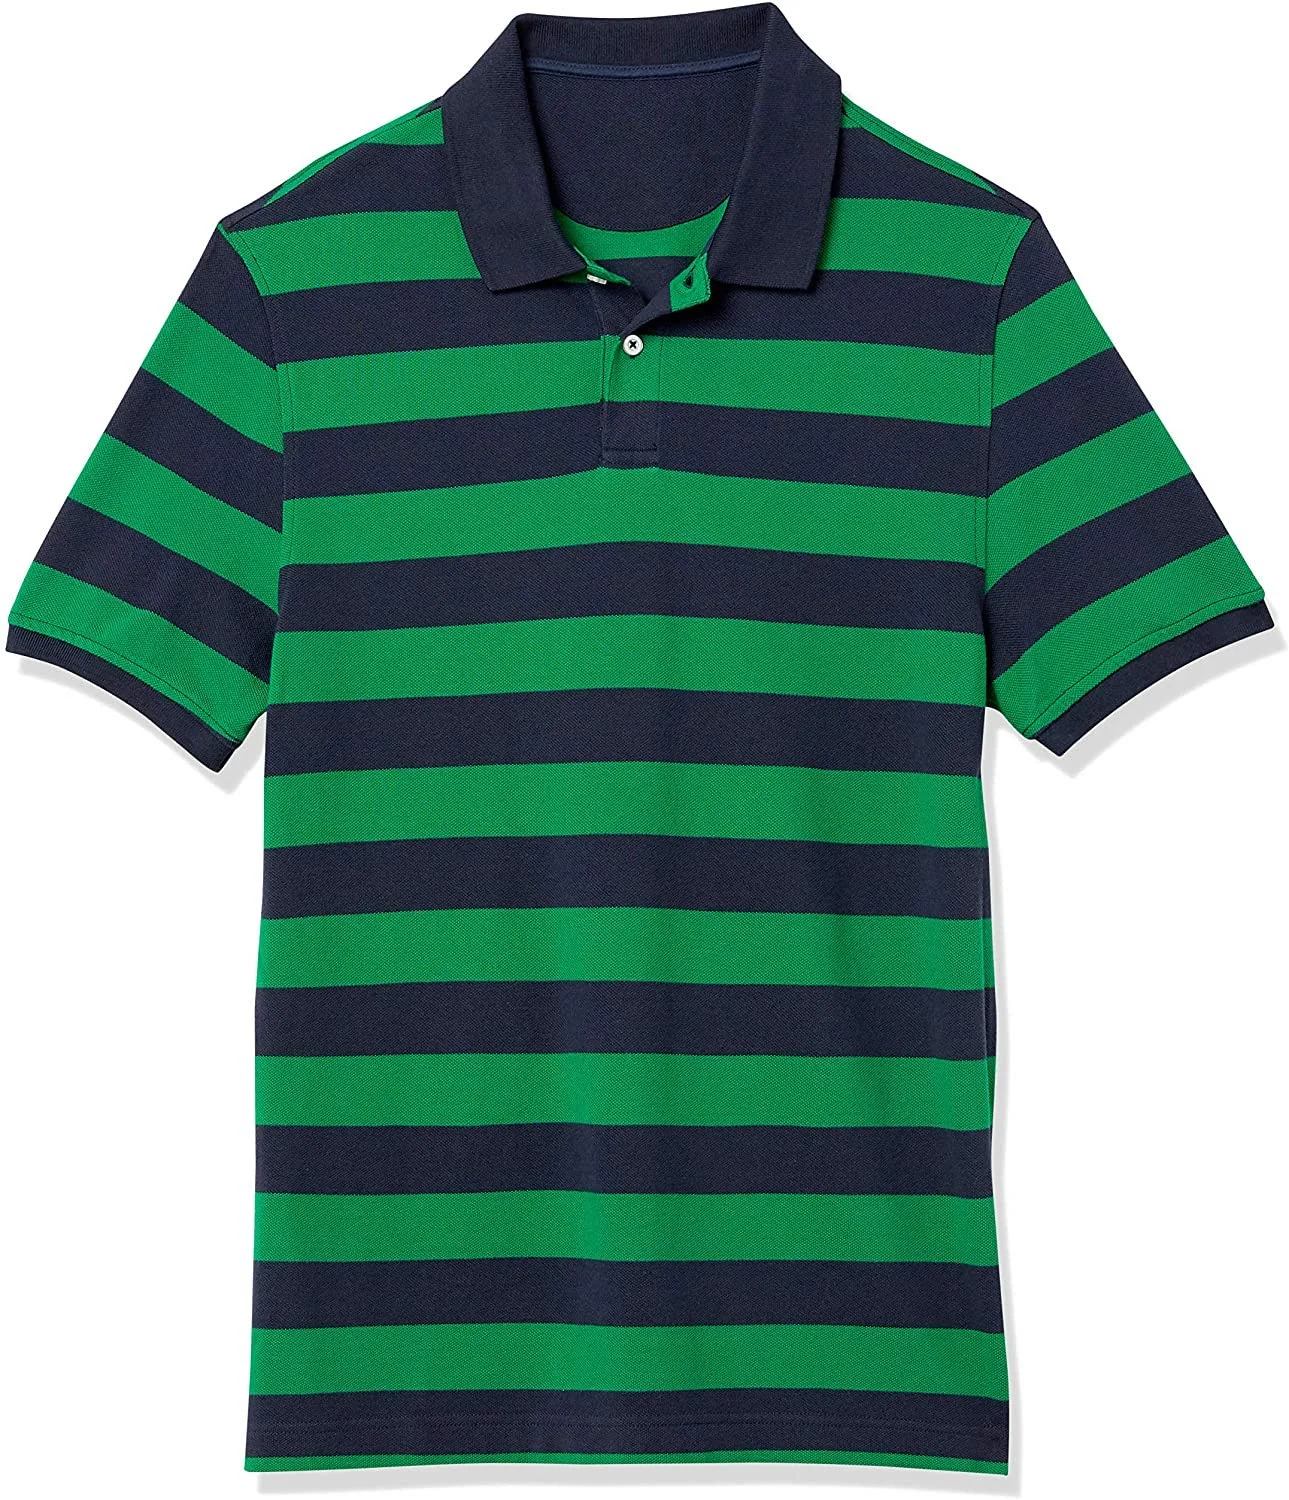 Wholesale Golf Shirts Supplier Bangladesh